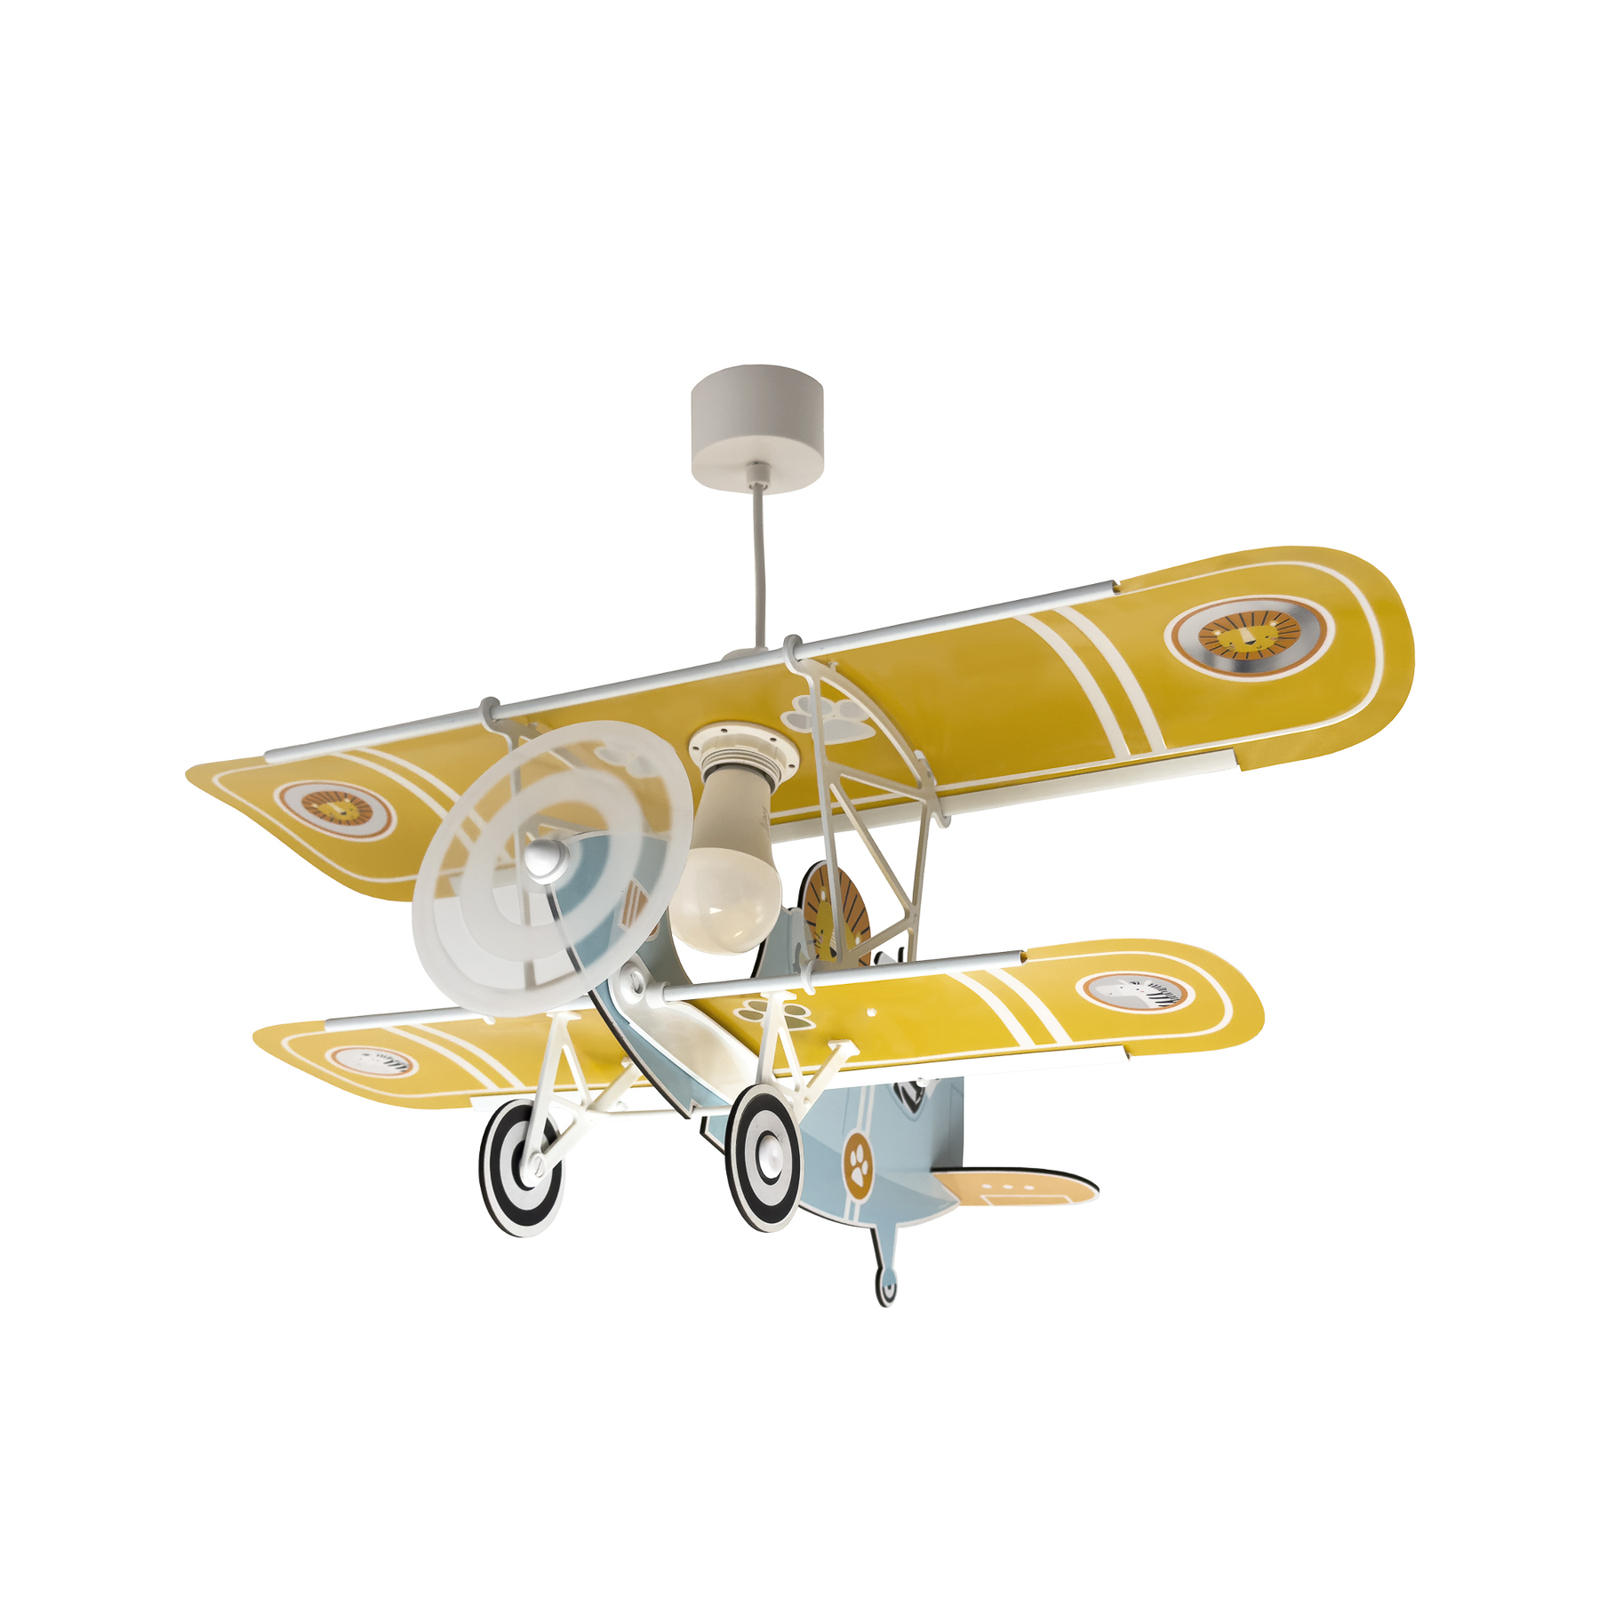 Dalber Suspension Lion Plane, multicolore, bois/plastique